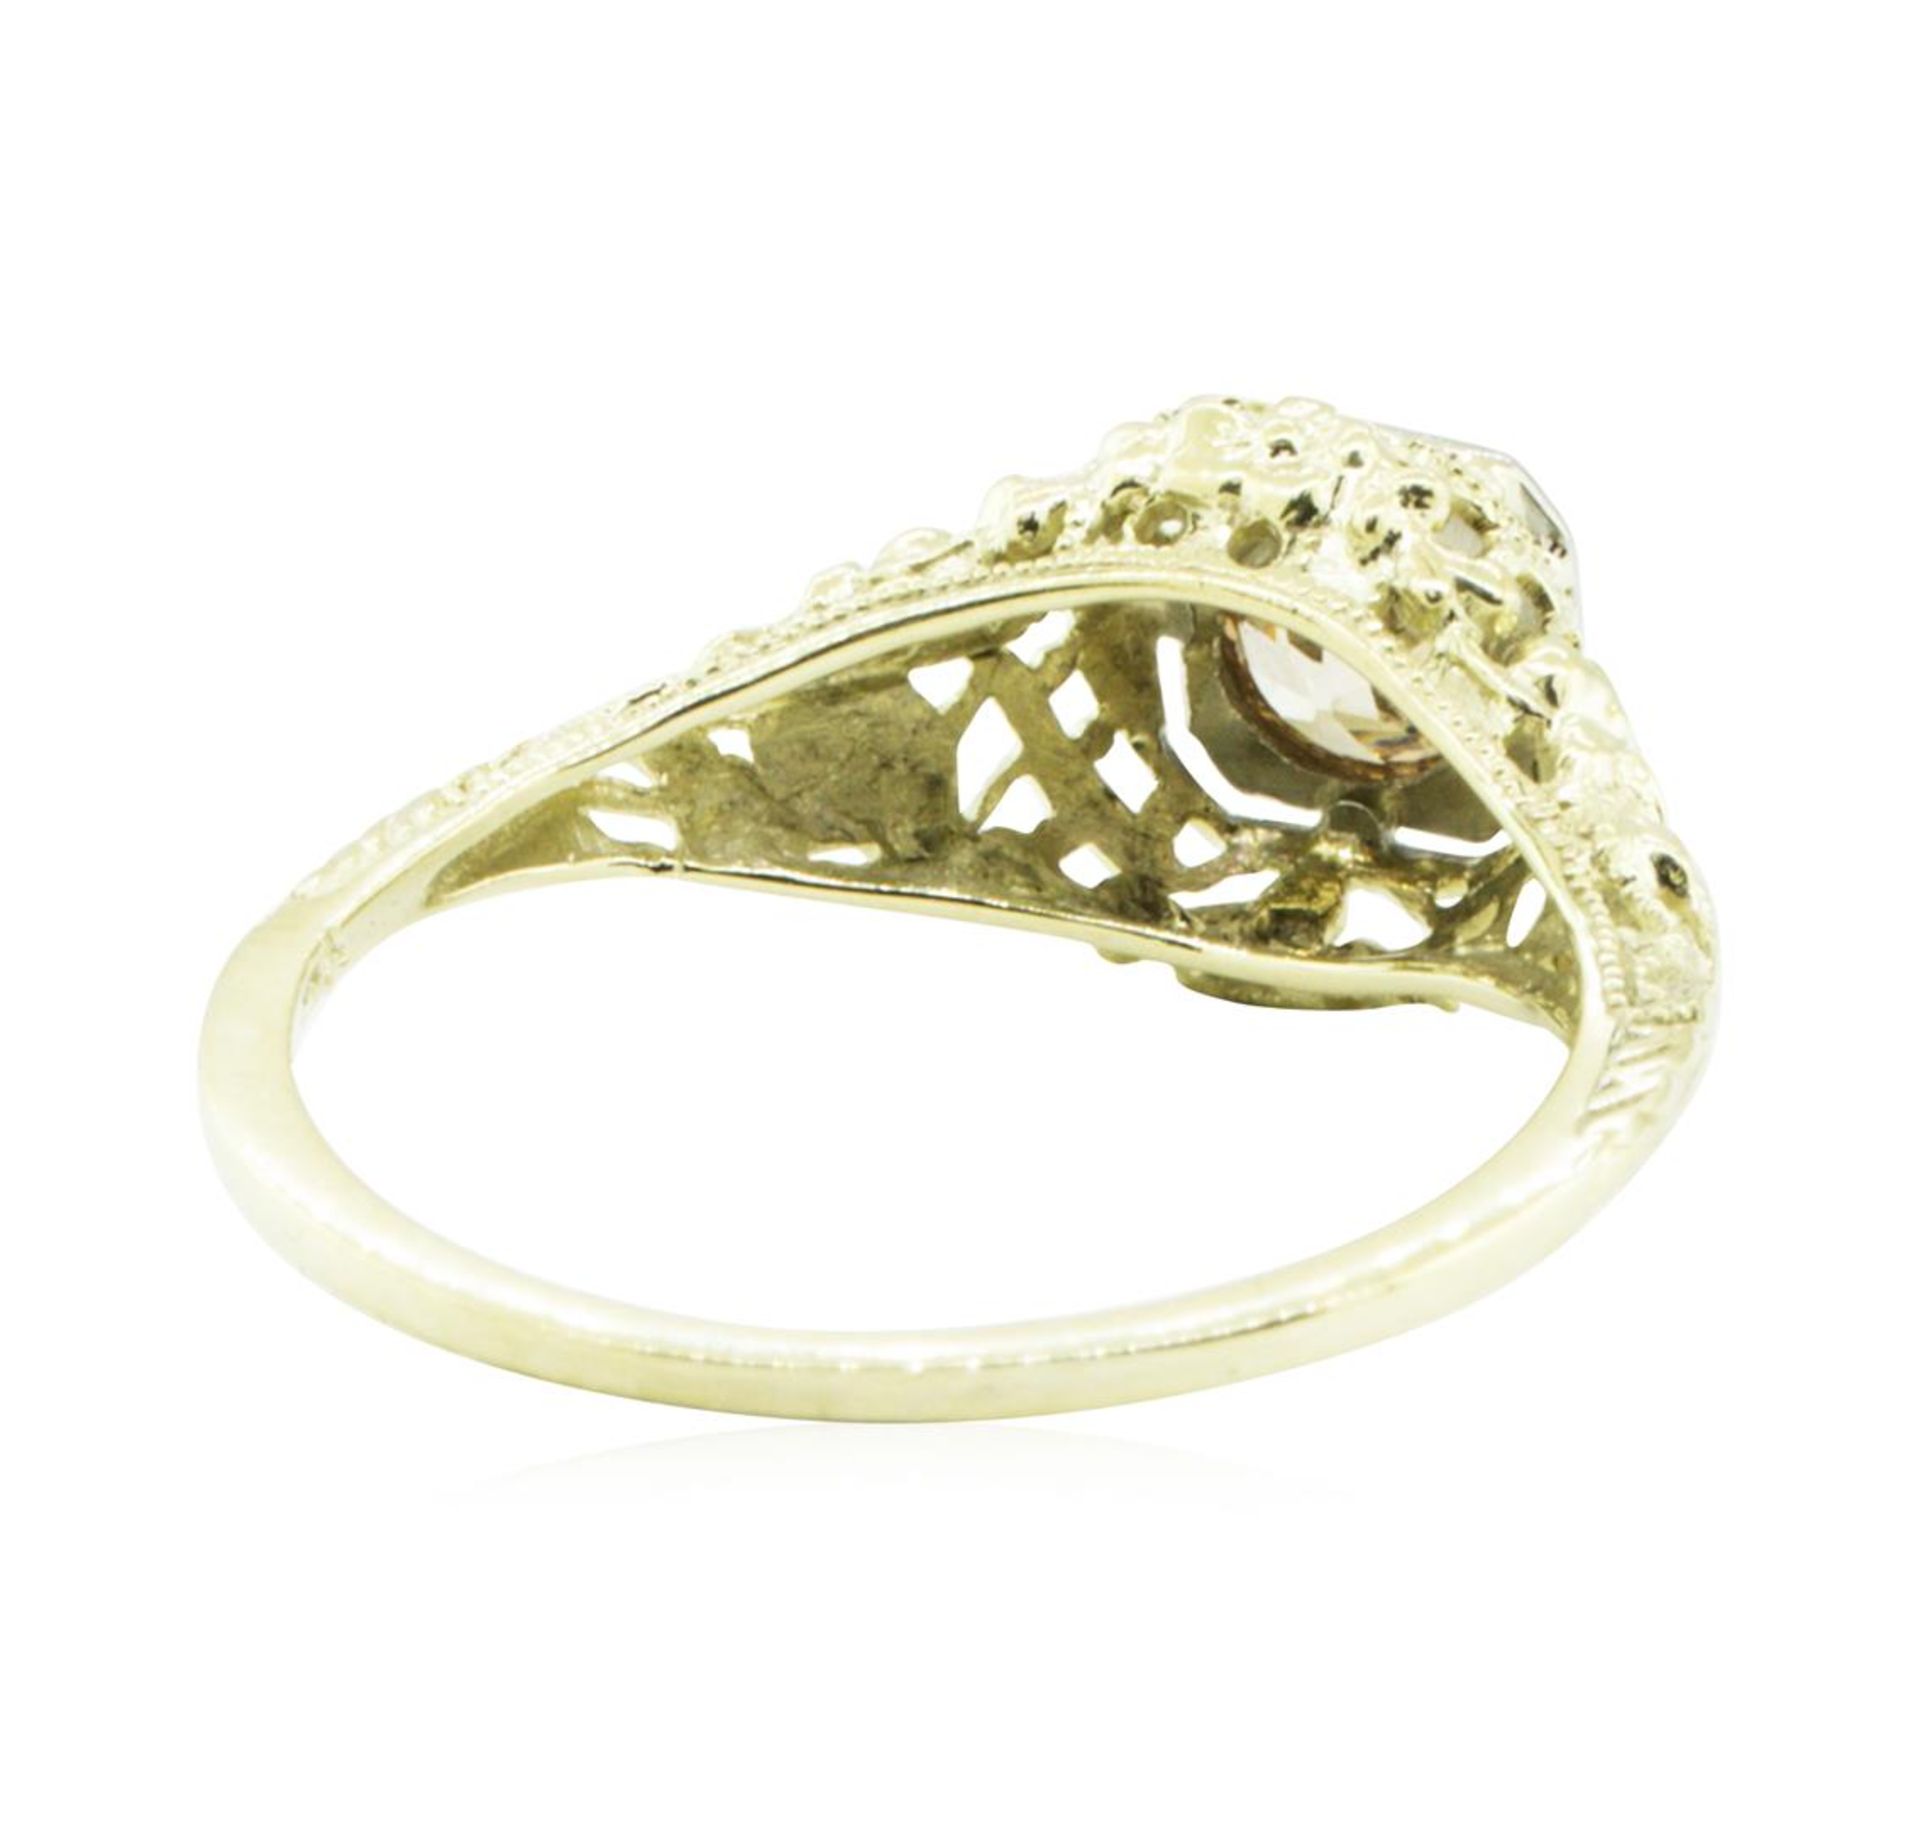 0.30 ctw Diamond Ring - 14KT Yellow Gold - Image 6 of 8